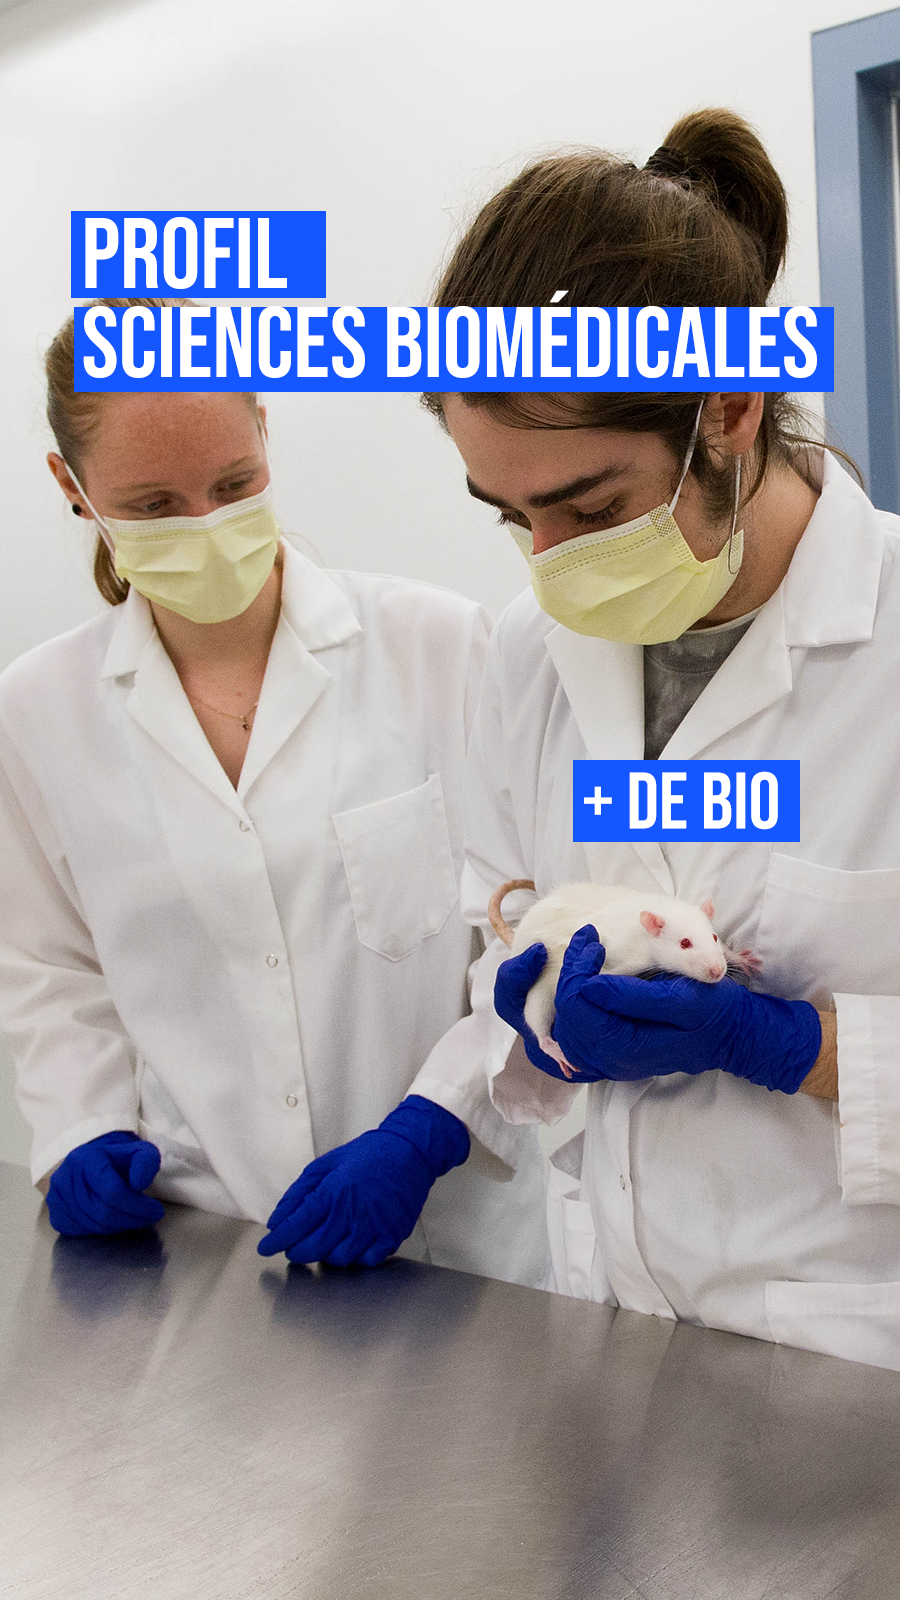 Profil sciences biomédicales